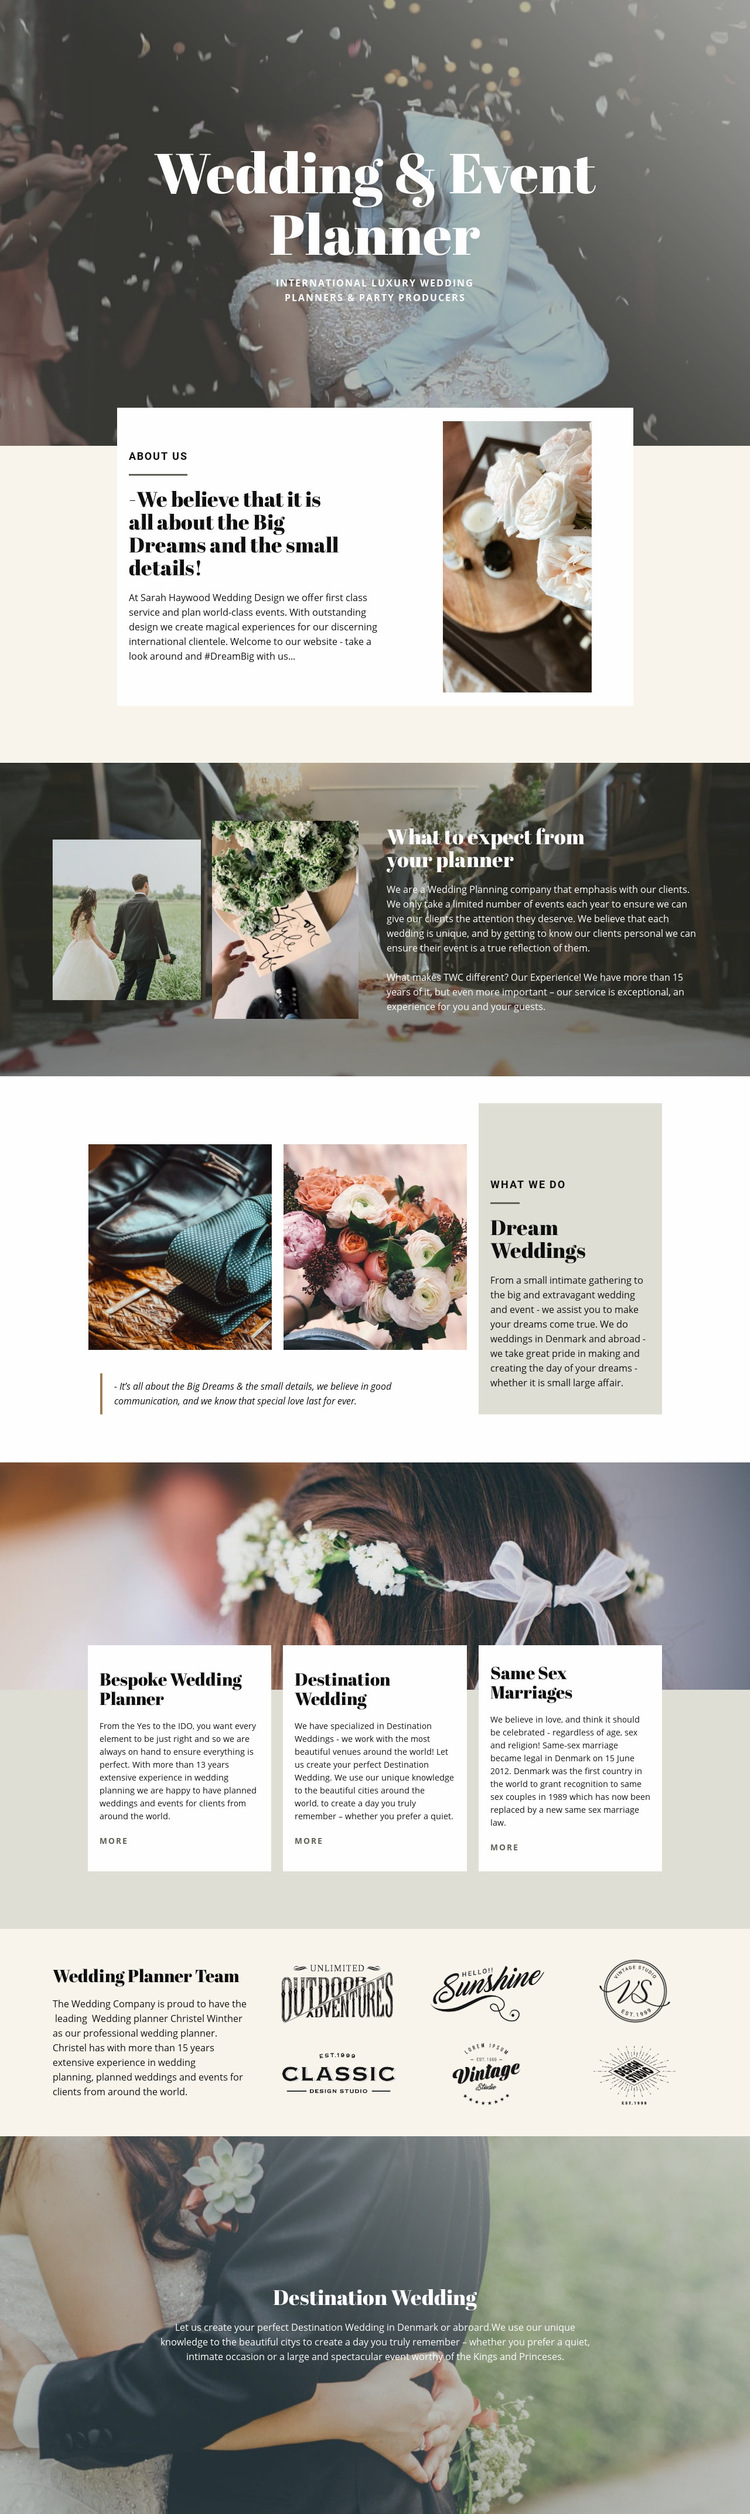 Biggest dream wedding Web Page Design